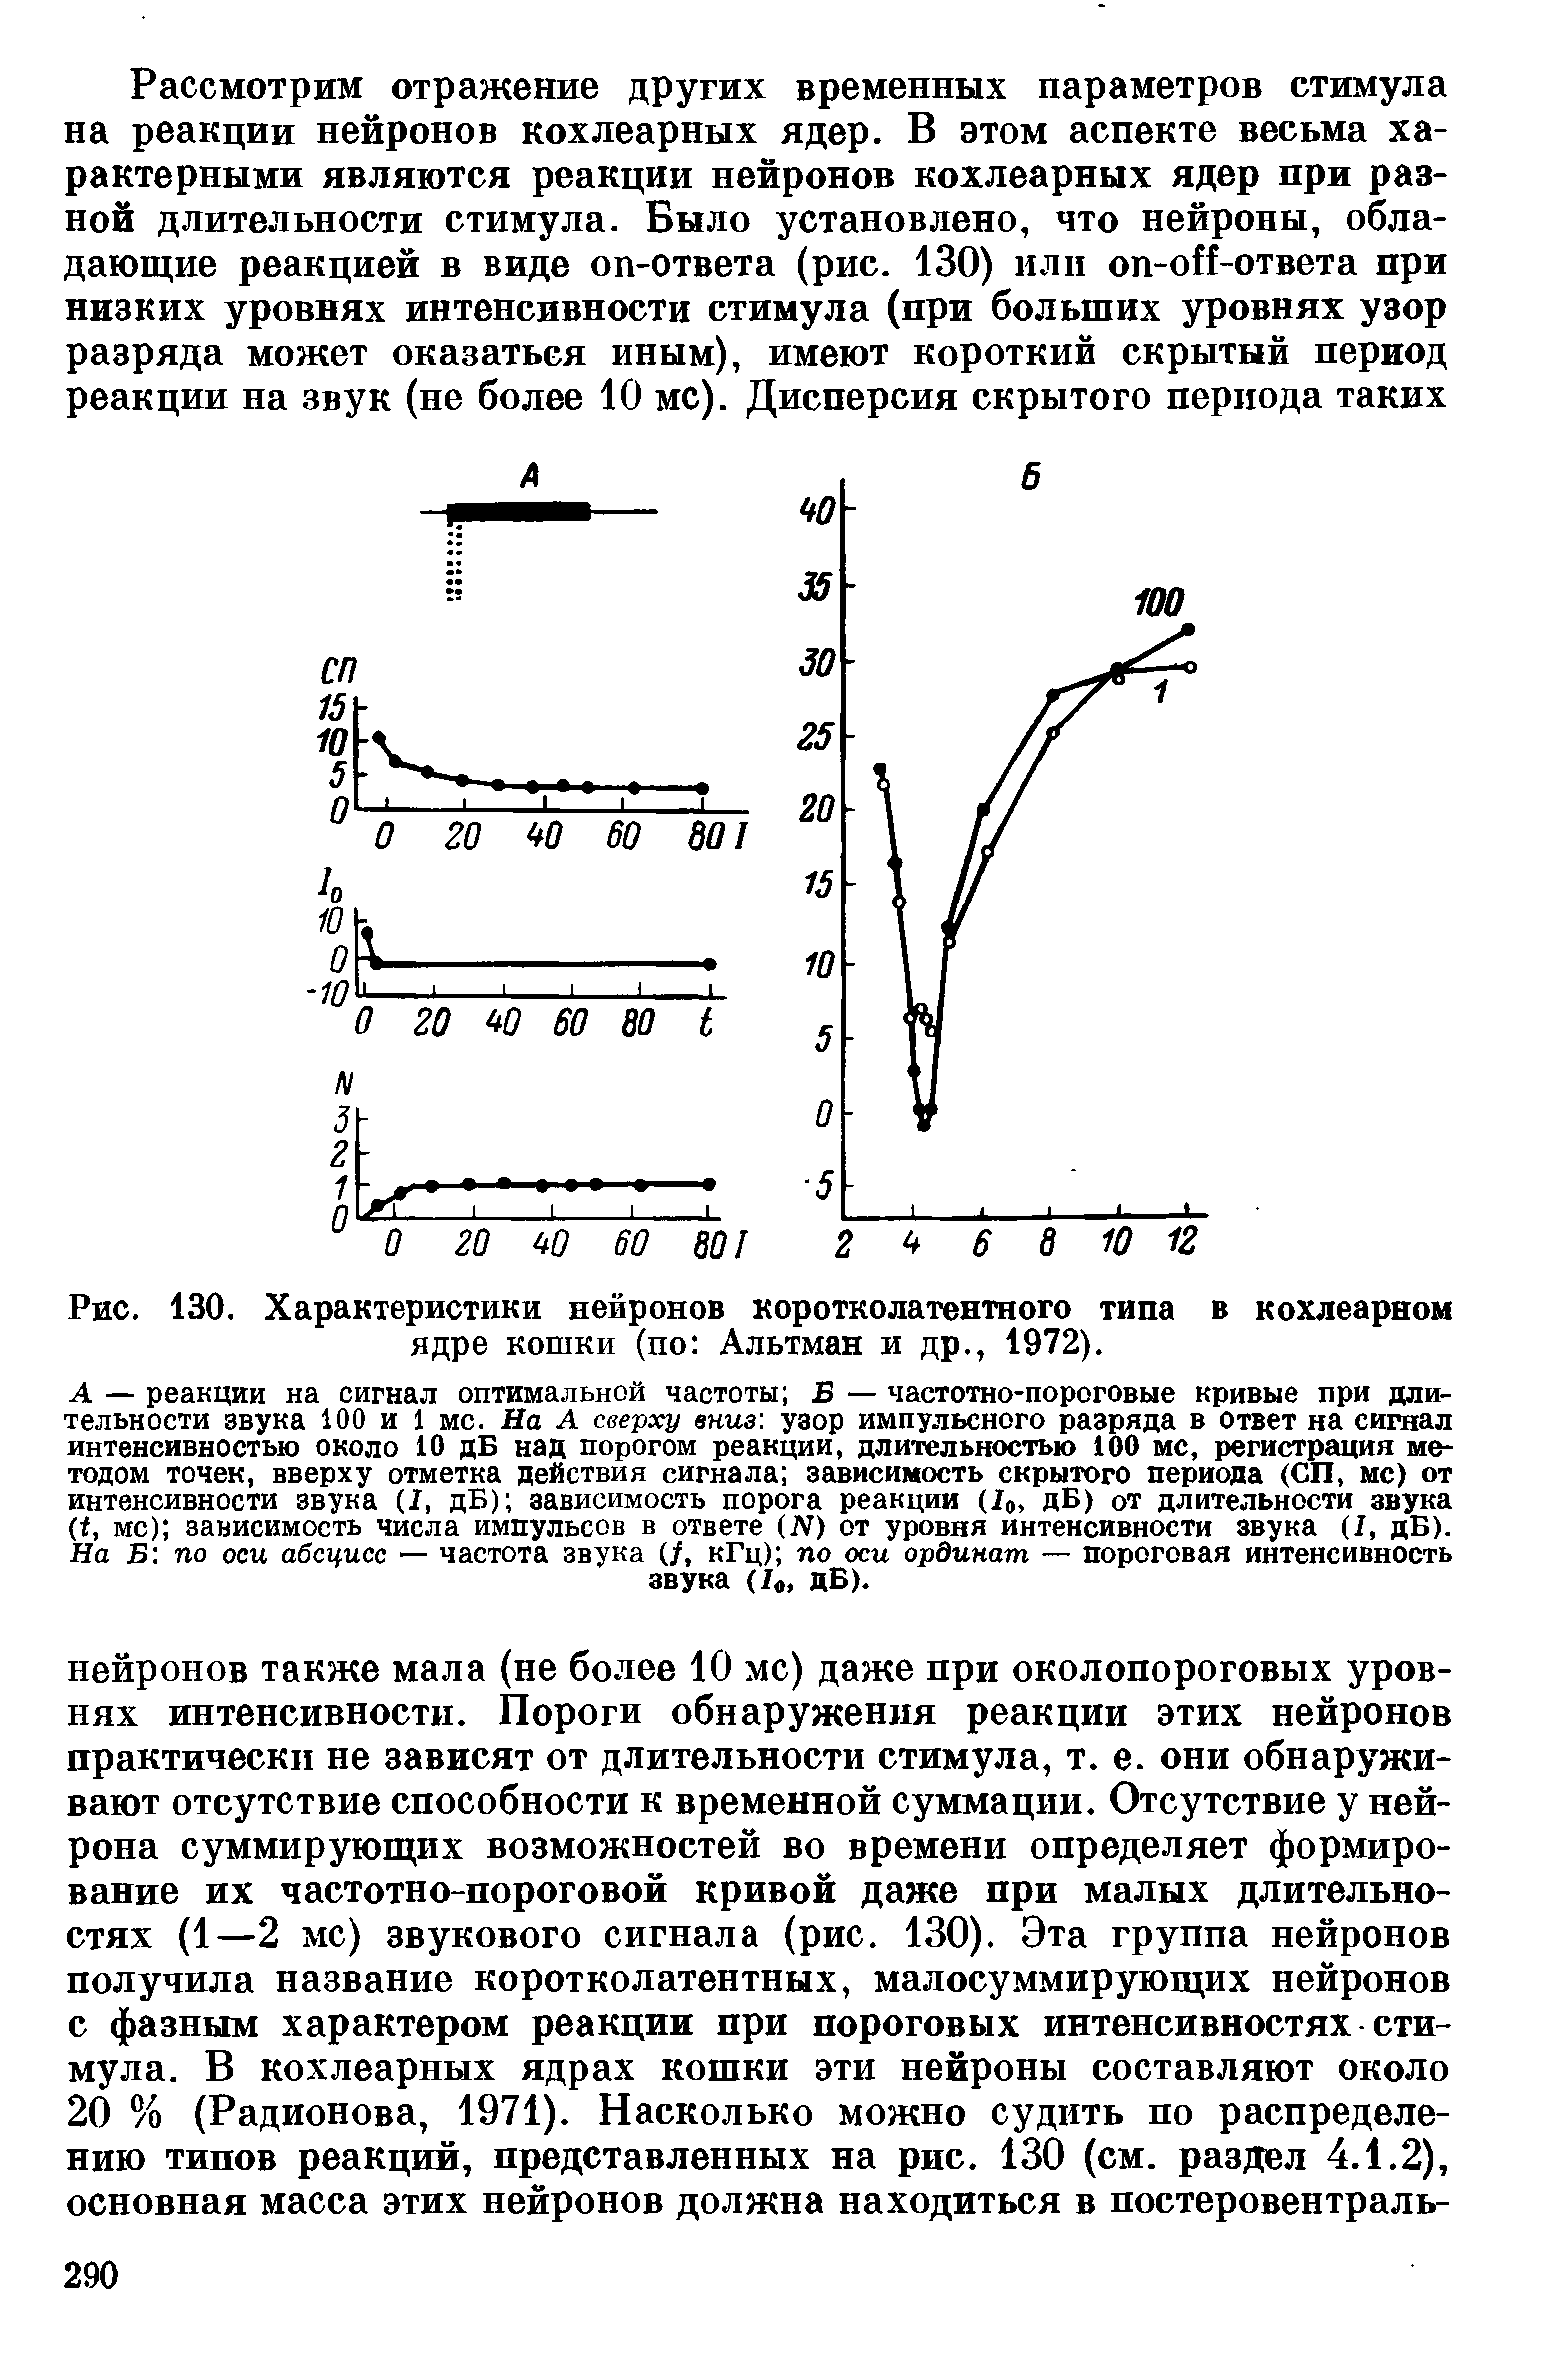 Рис. 130. Характеристики нейронов коротколатентного типа в кохлеарной ядре кошки (по Альтман и др., 1972).